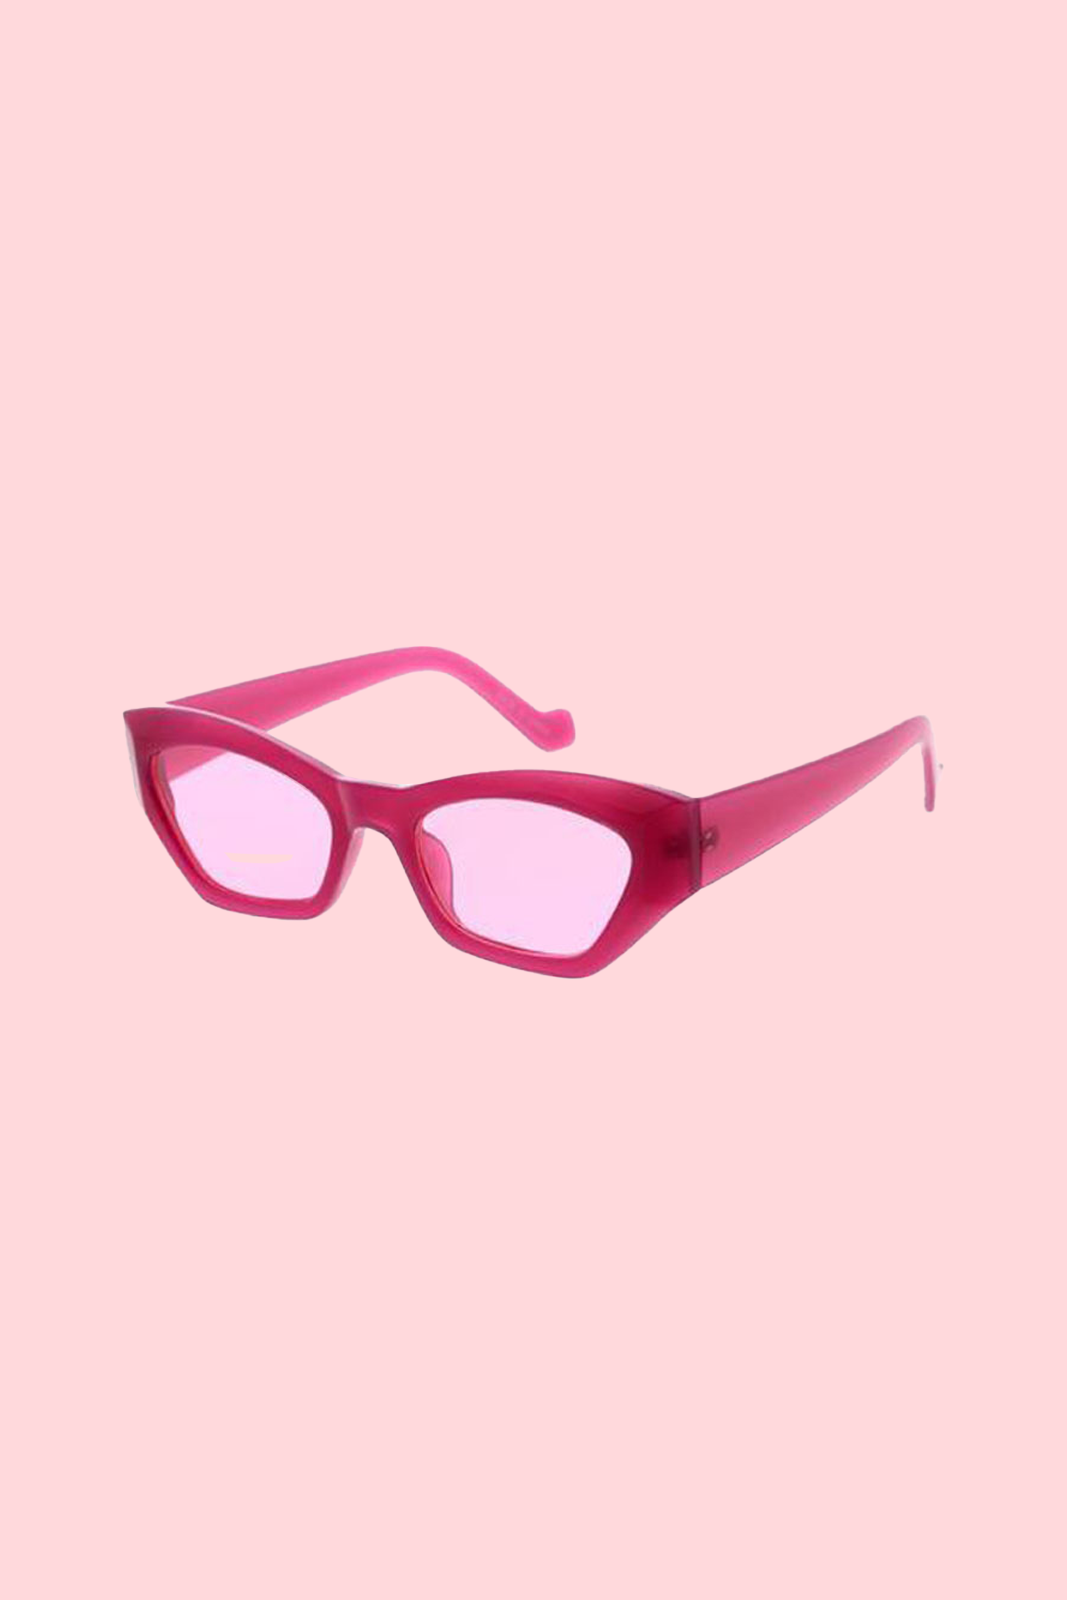 Paige Sunglasses - Pink